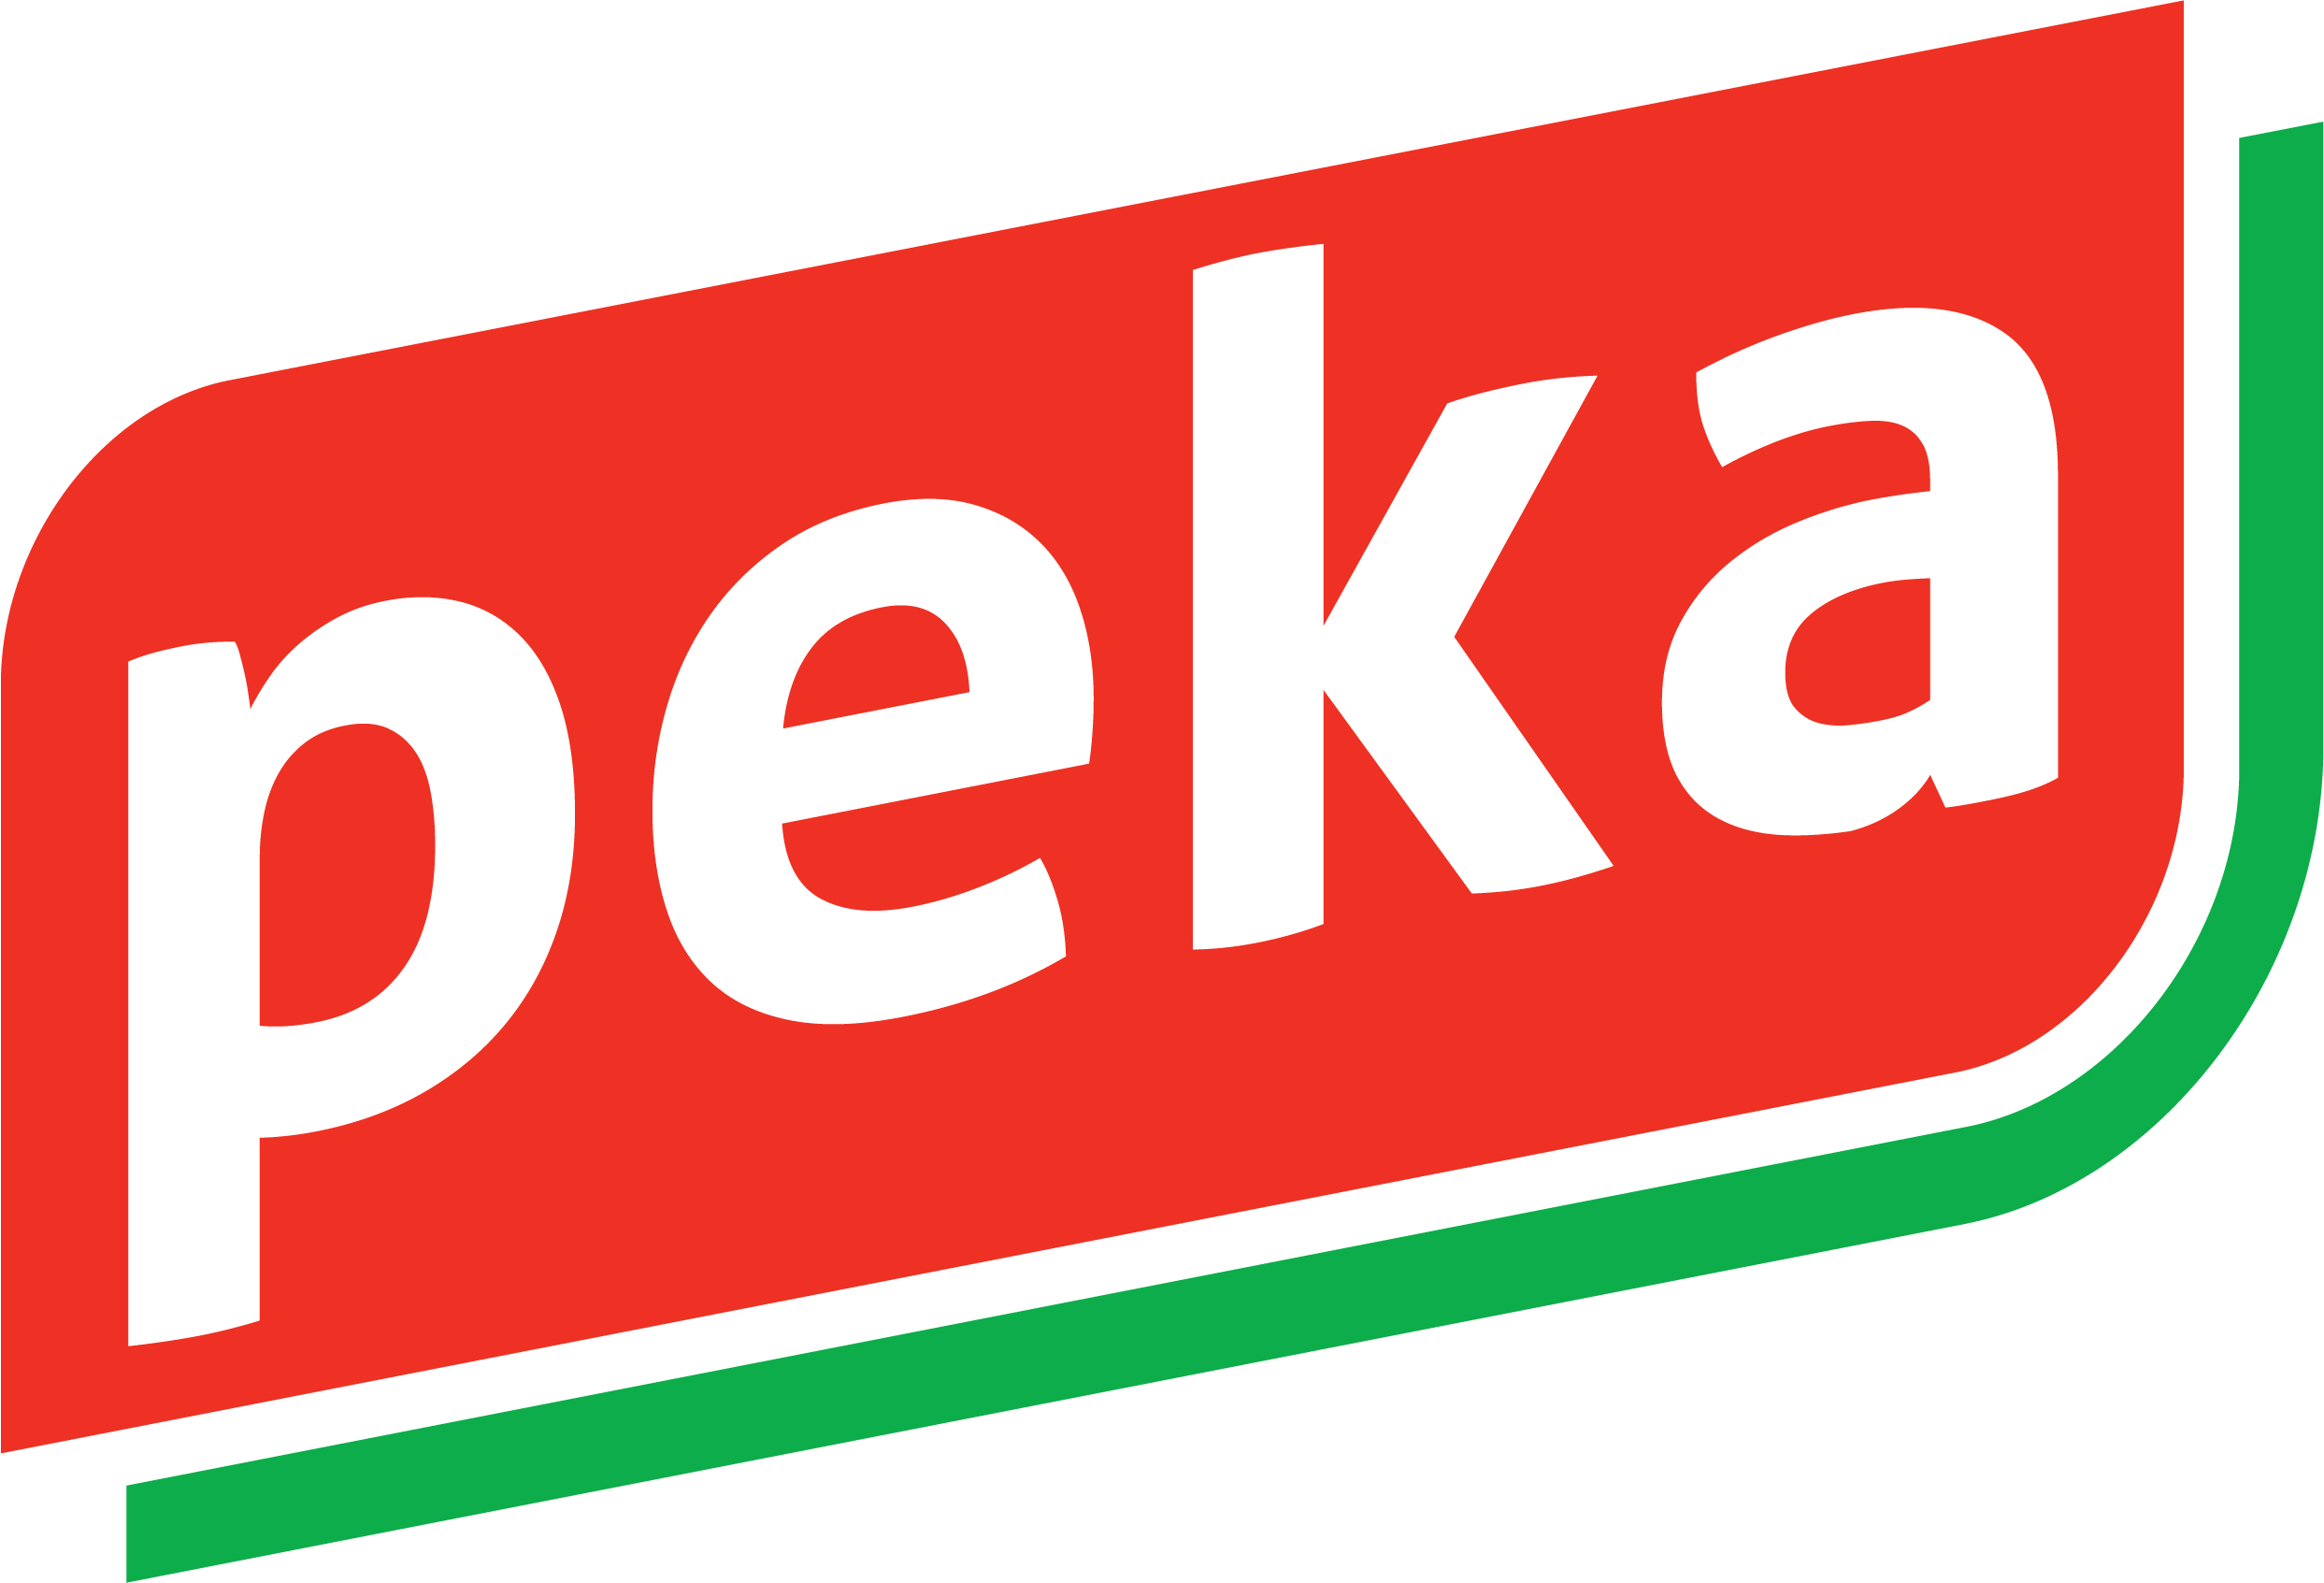 12 Peka Logo 2020